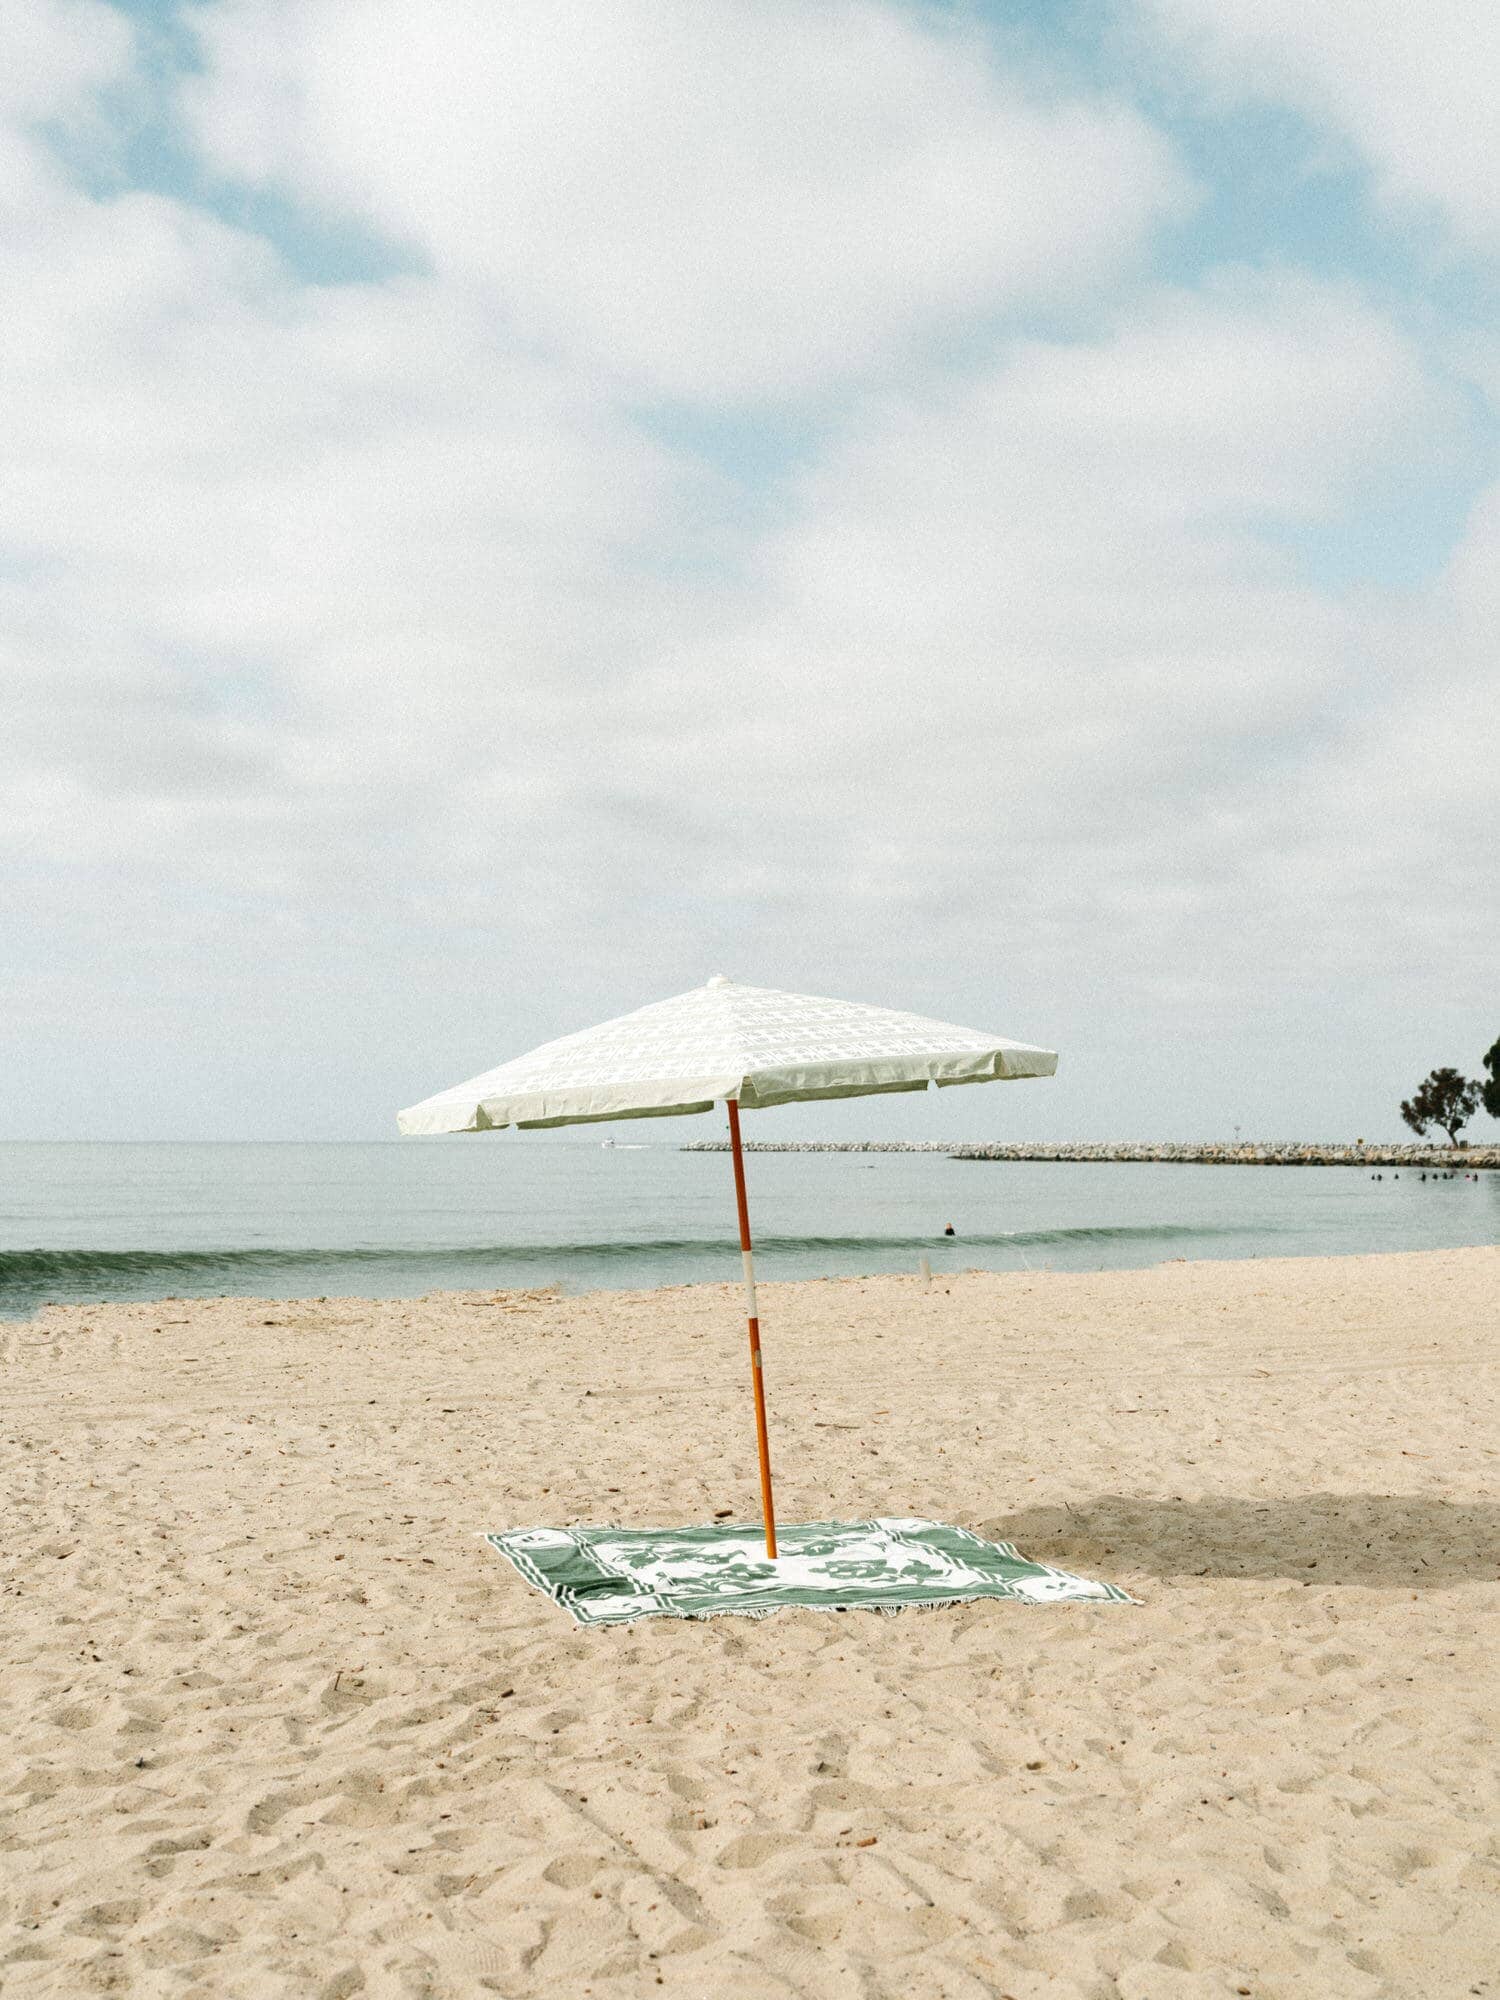 Amalfi umbrella and blanket on the beach